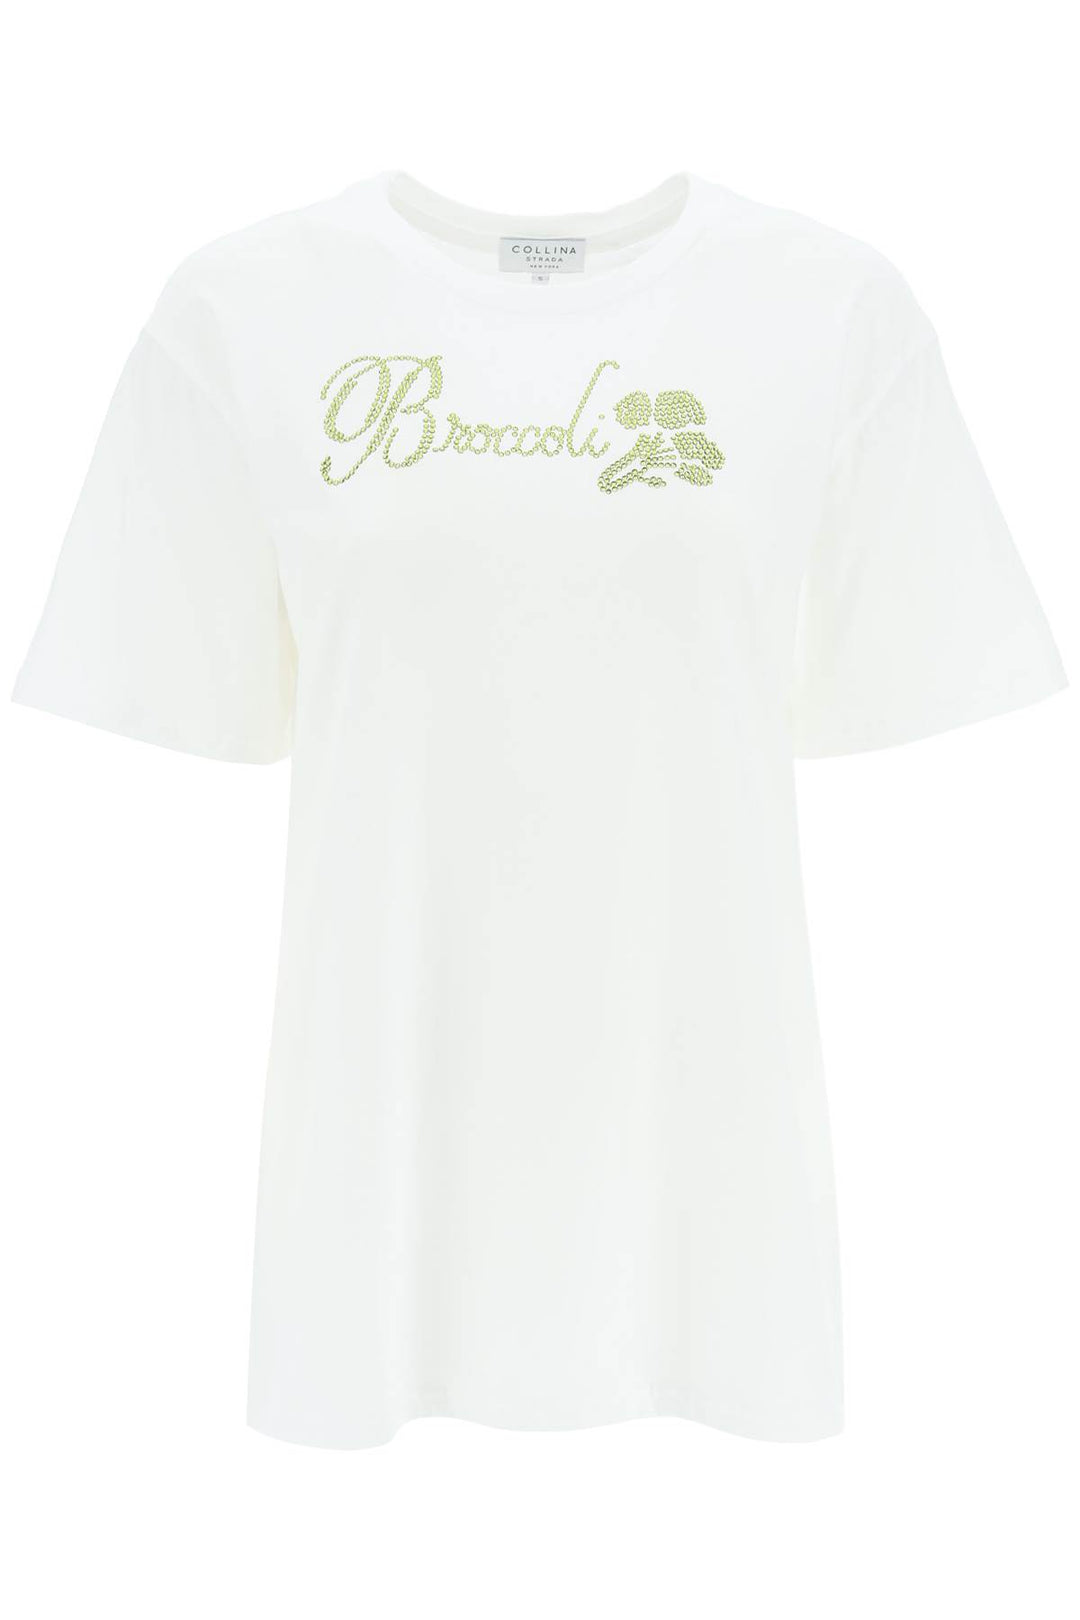 Collina strada organic cotton t-shirt with rhinestones-0